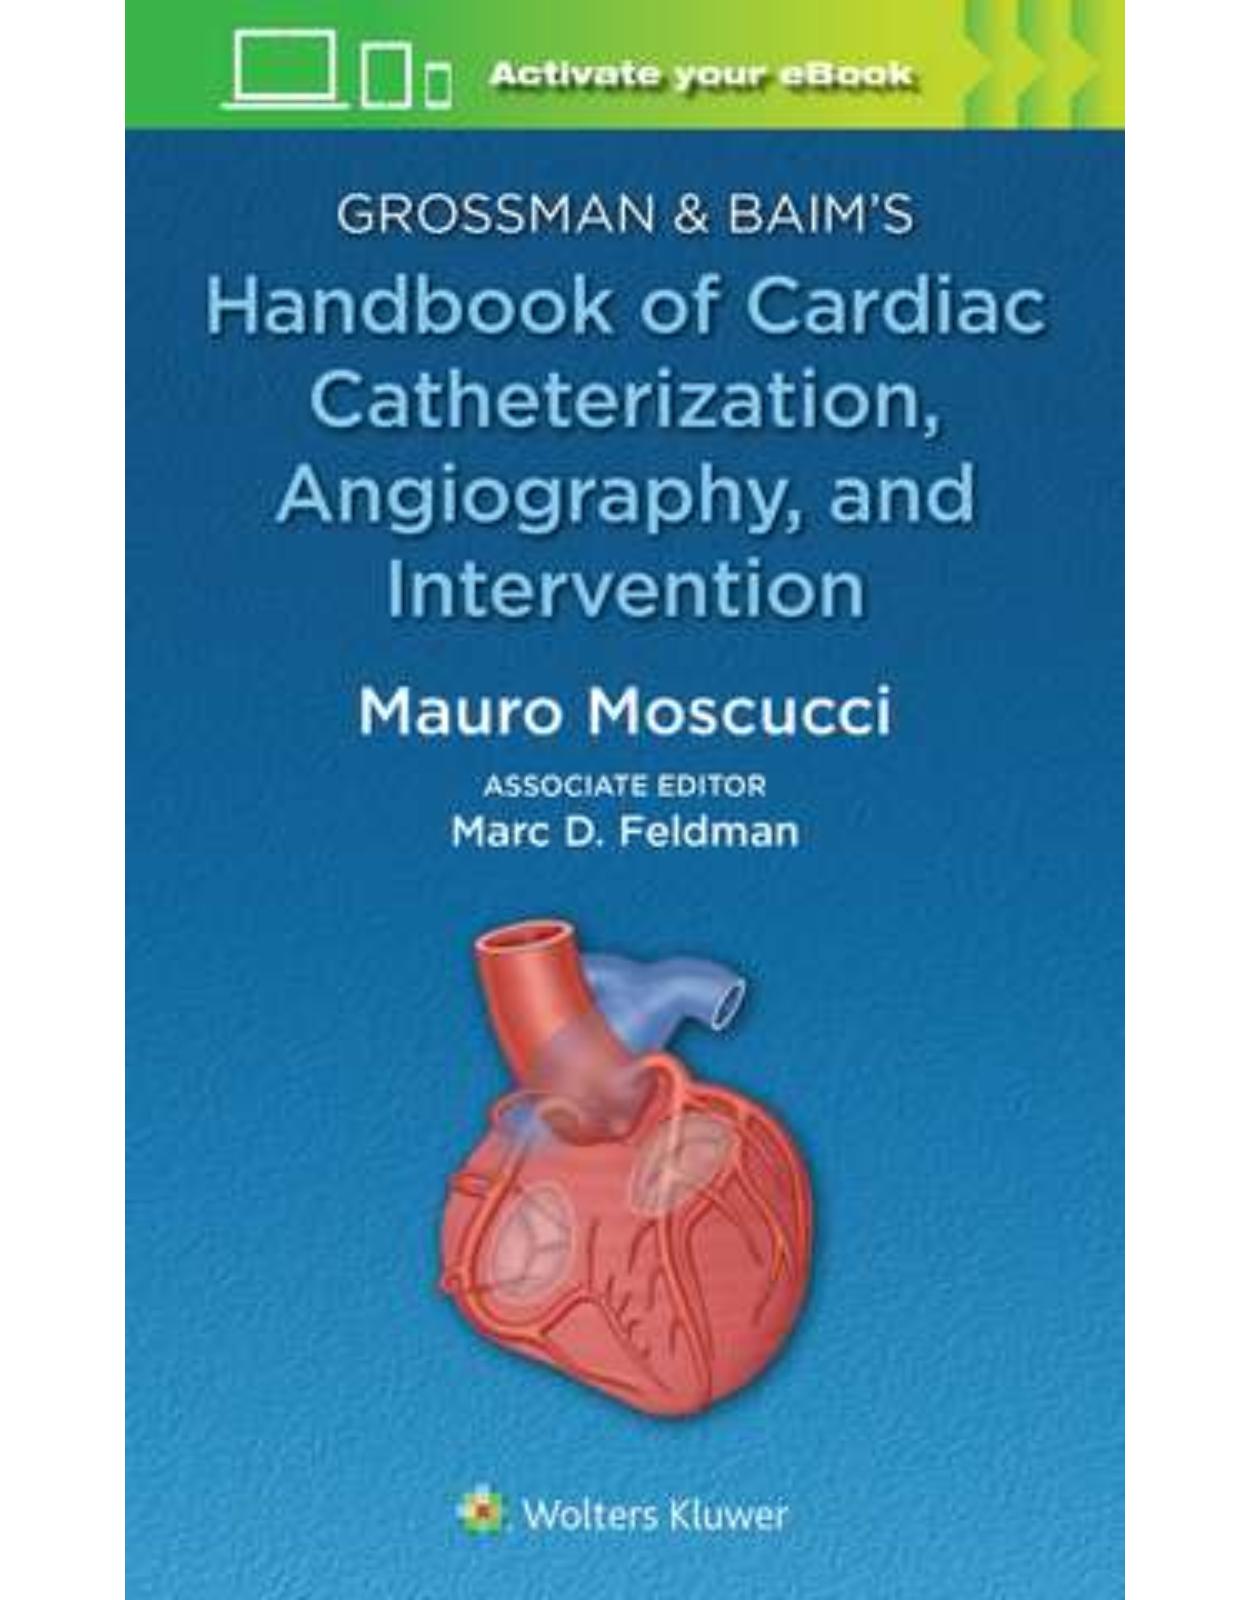 Grossman & Baim’s Handbook of Cardiac Catheterization, Angiography, and Intervention